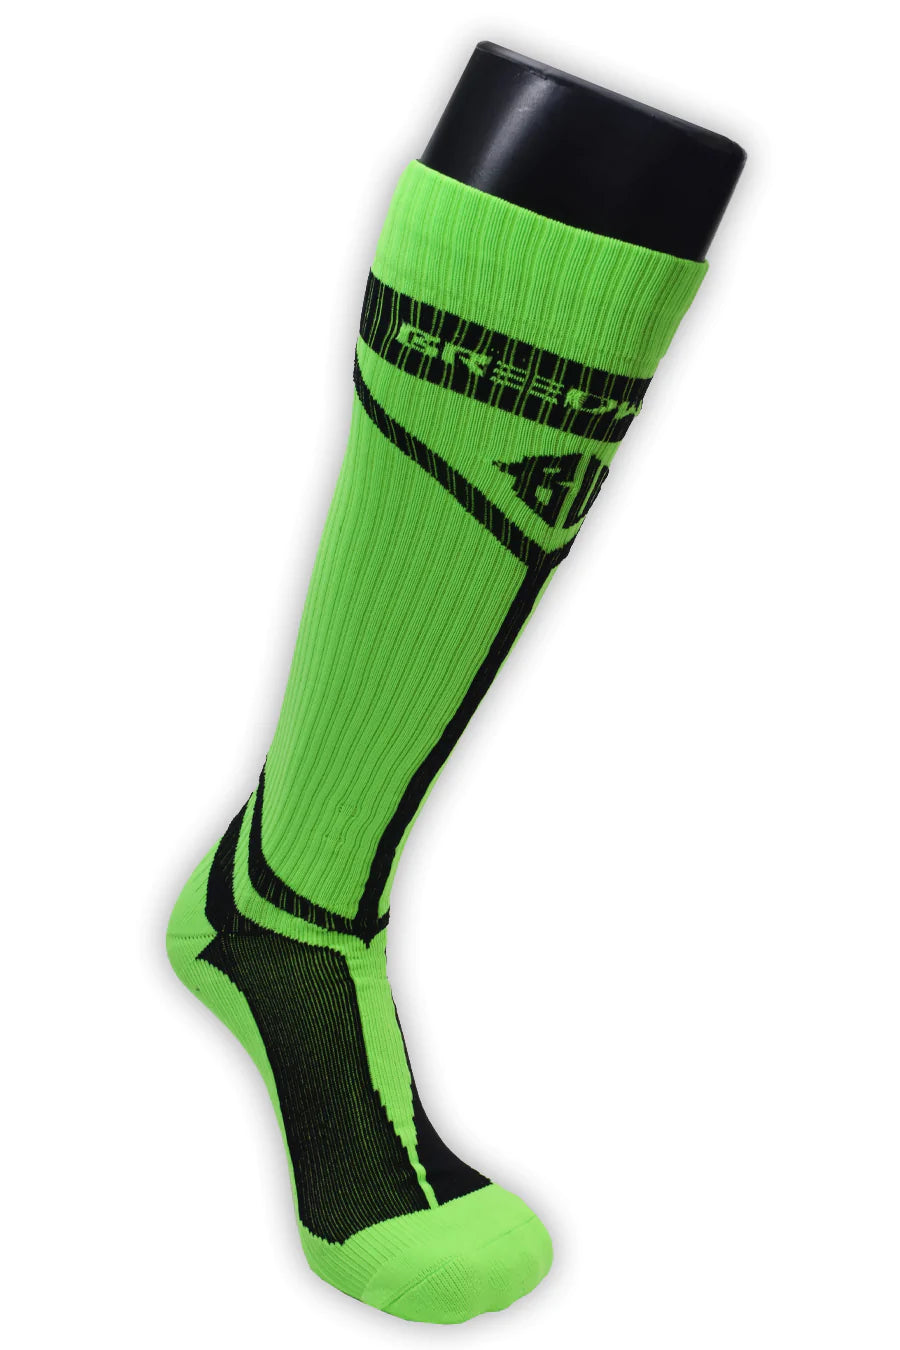 A mannequin leg wearing a neon green Hybred Sock.